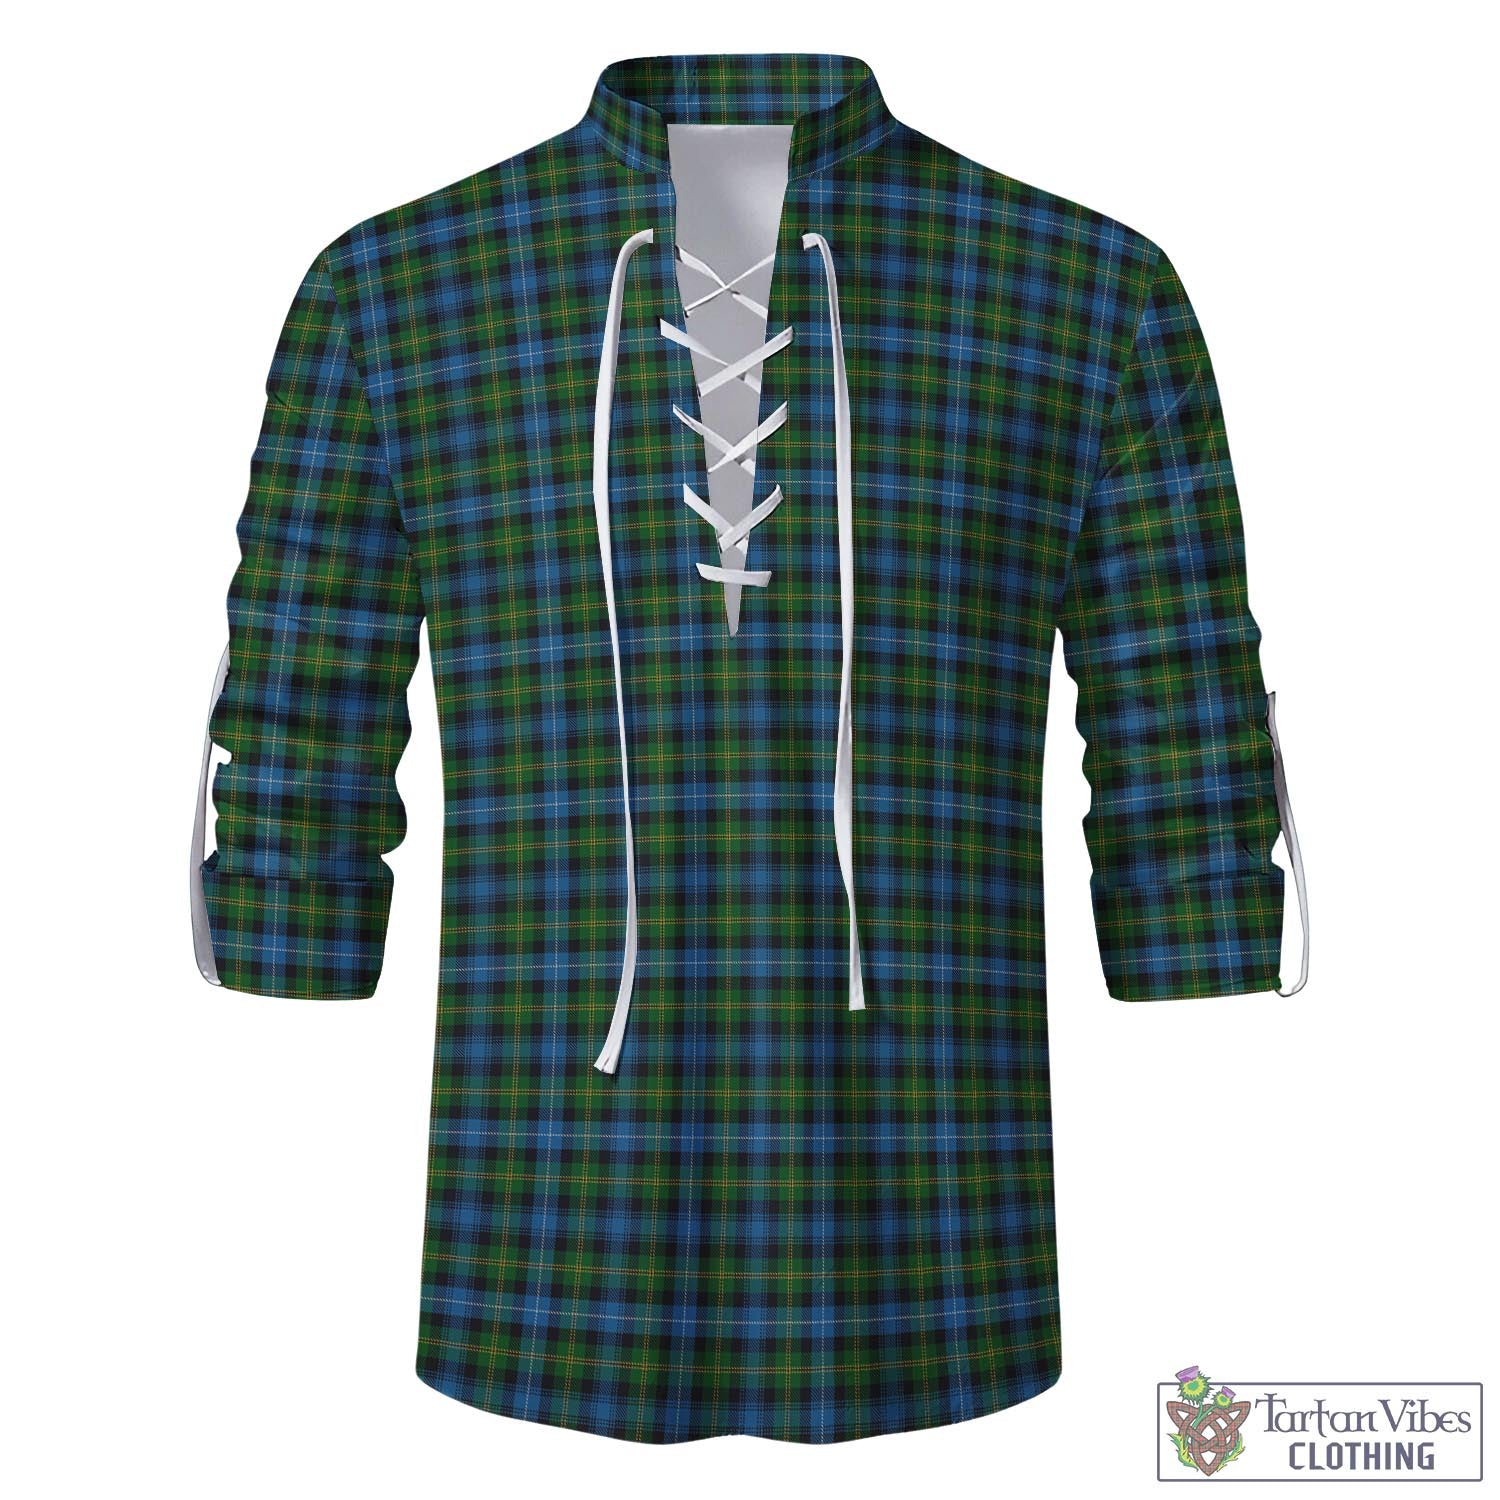 Tartan Vibes Clothing Dyce Tartan Men's Scottish Traditional Jacobite Ghillie Kilt Shirt